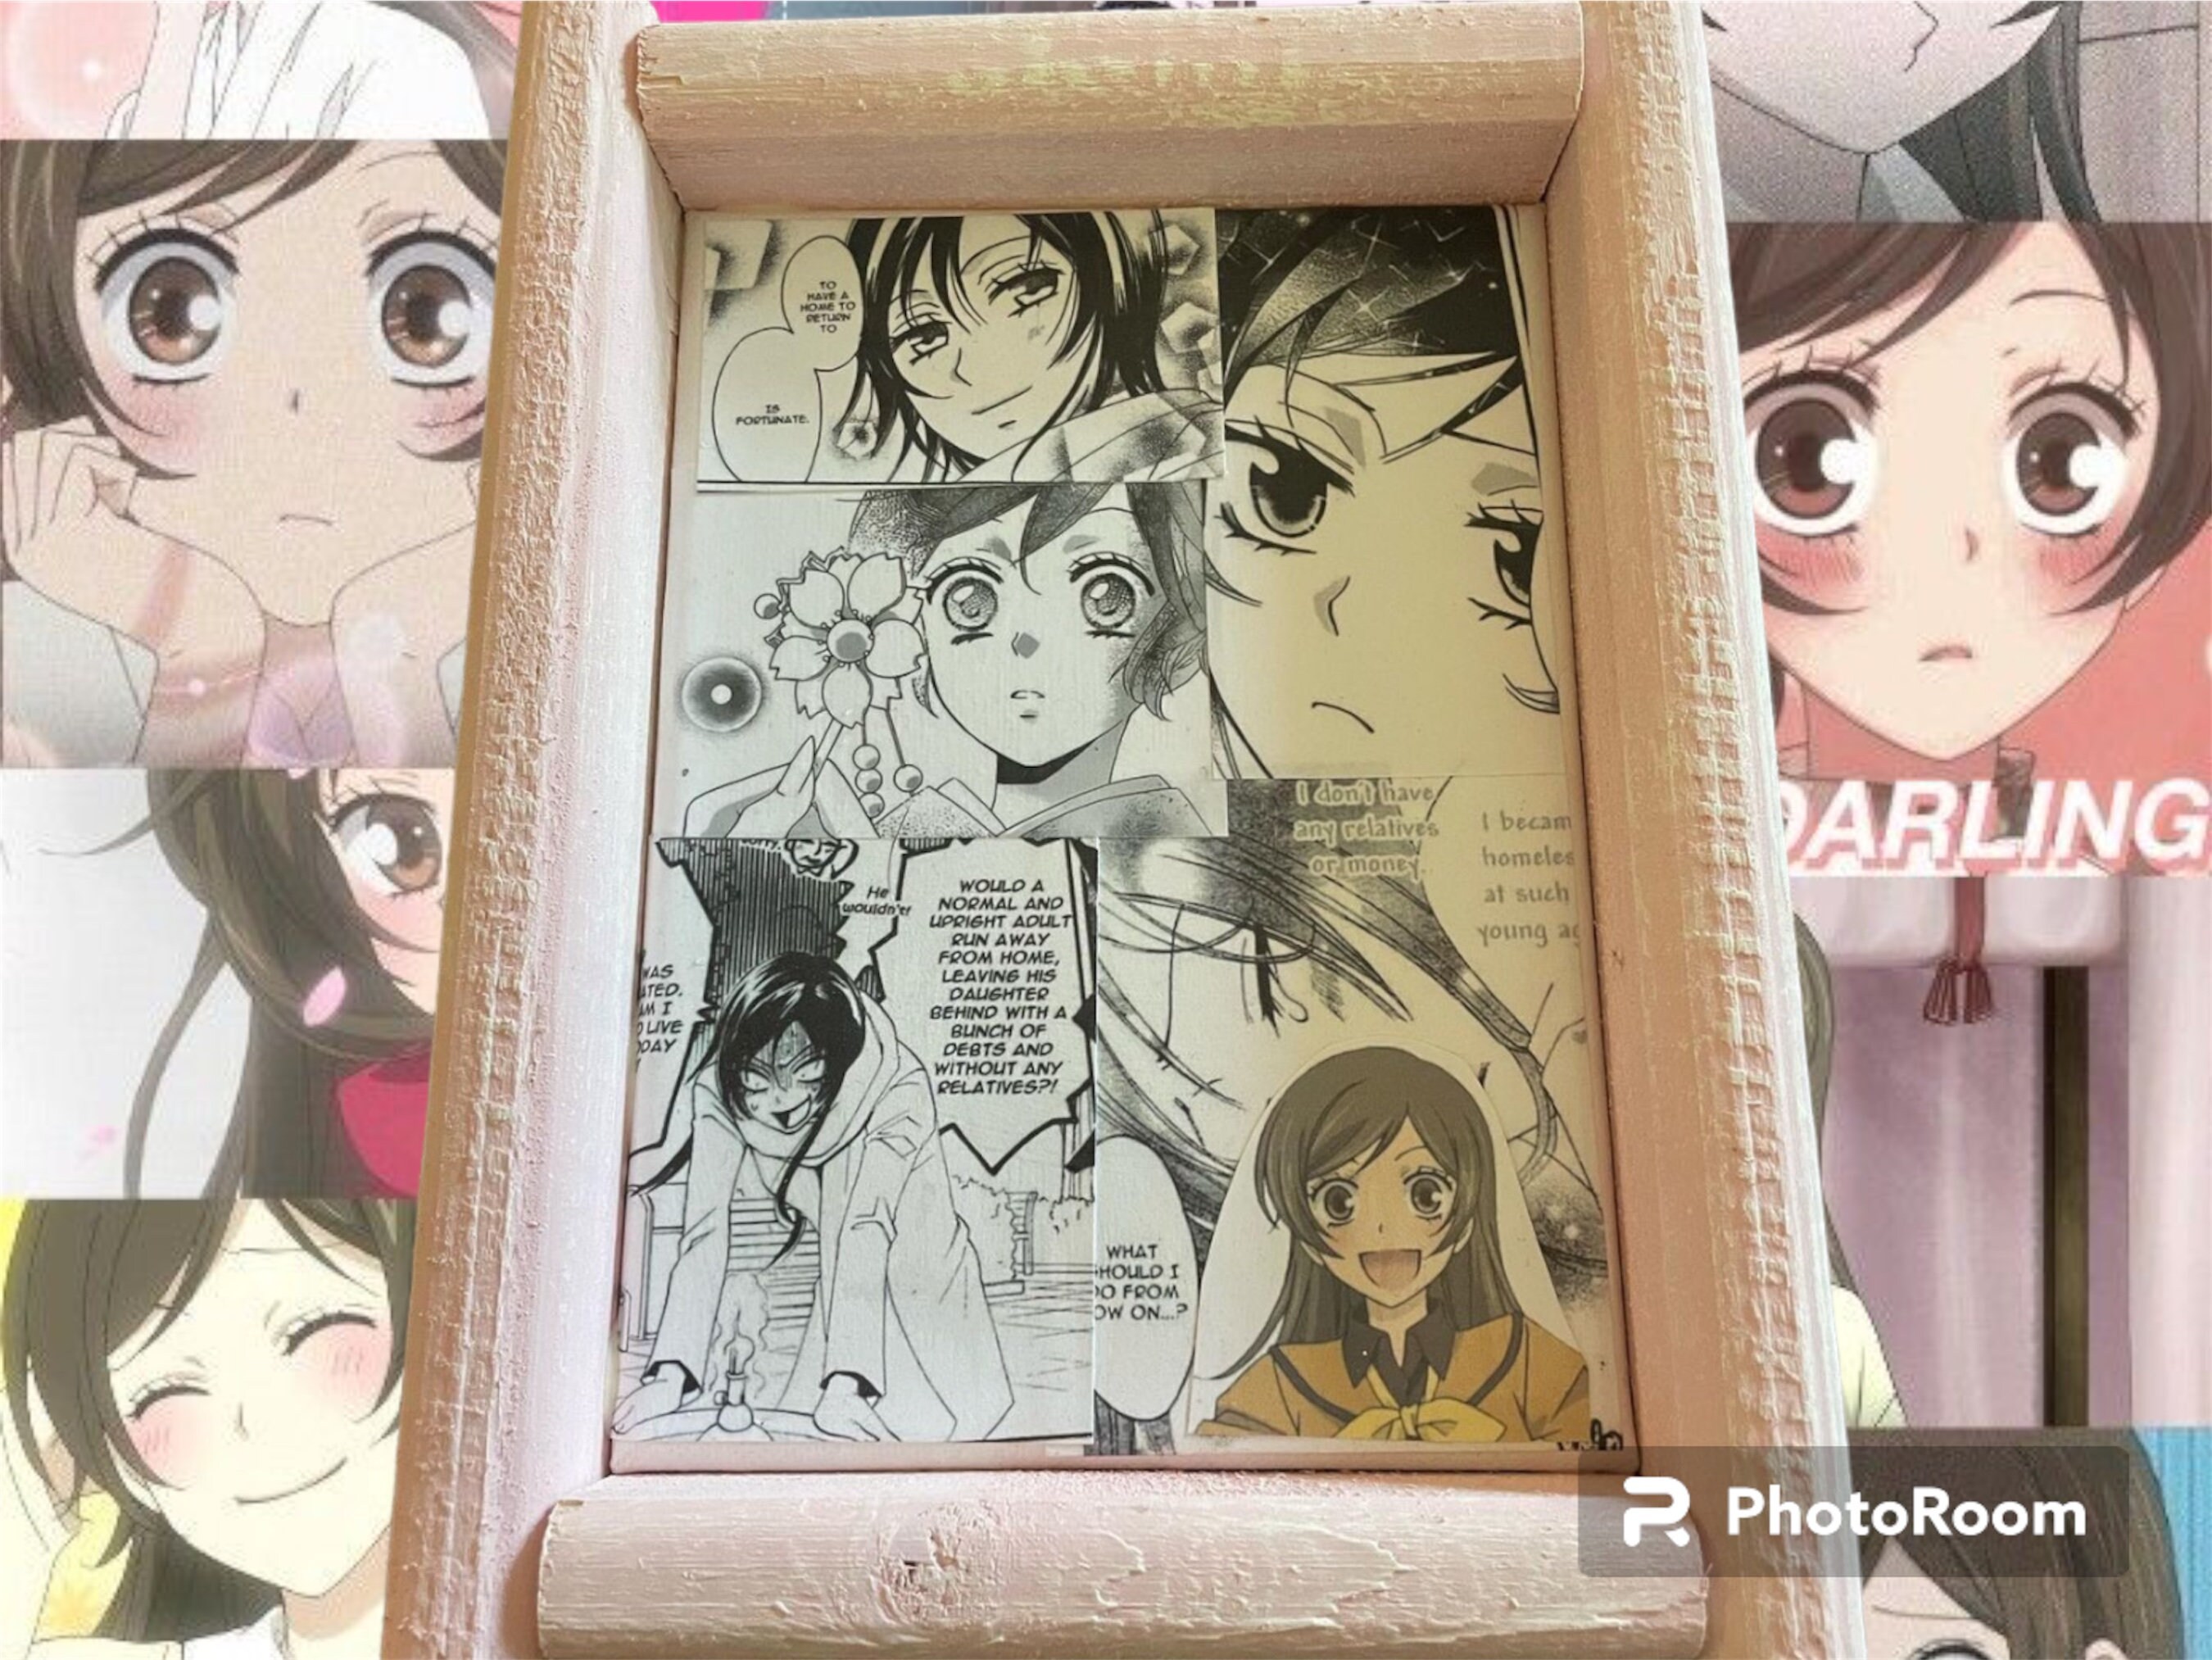 Akura-Ou and Tomoe Kamisama Kiss (Kamisama Hajimemashita) Anime A4 Gloss  Laminated Print